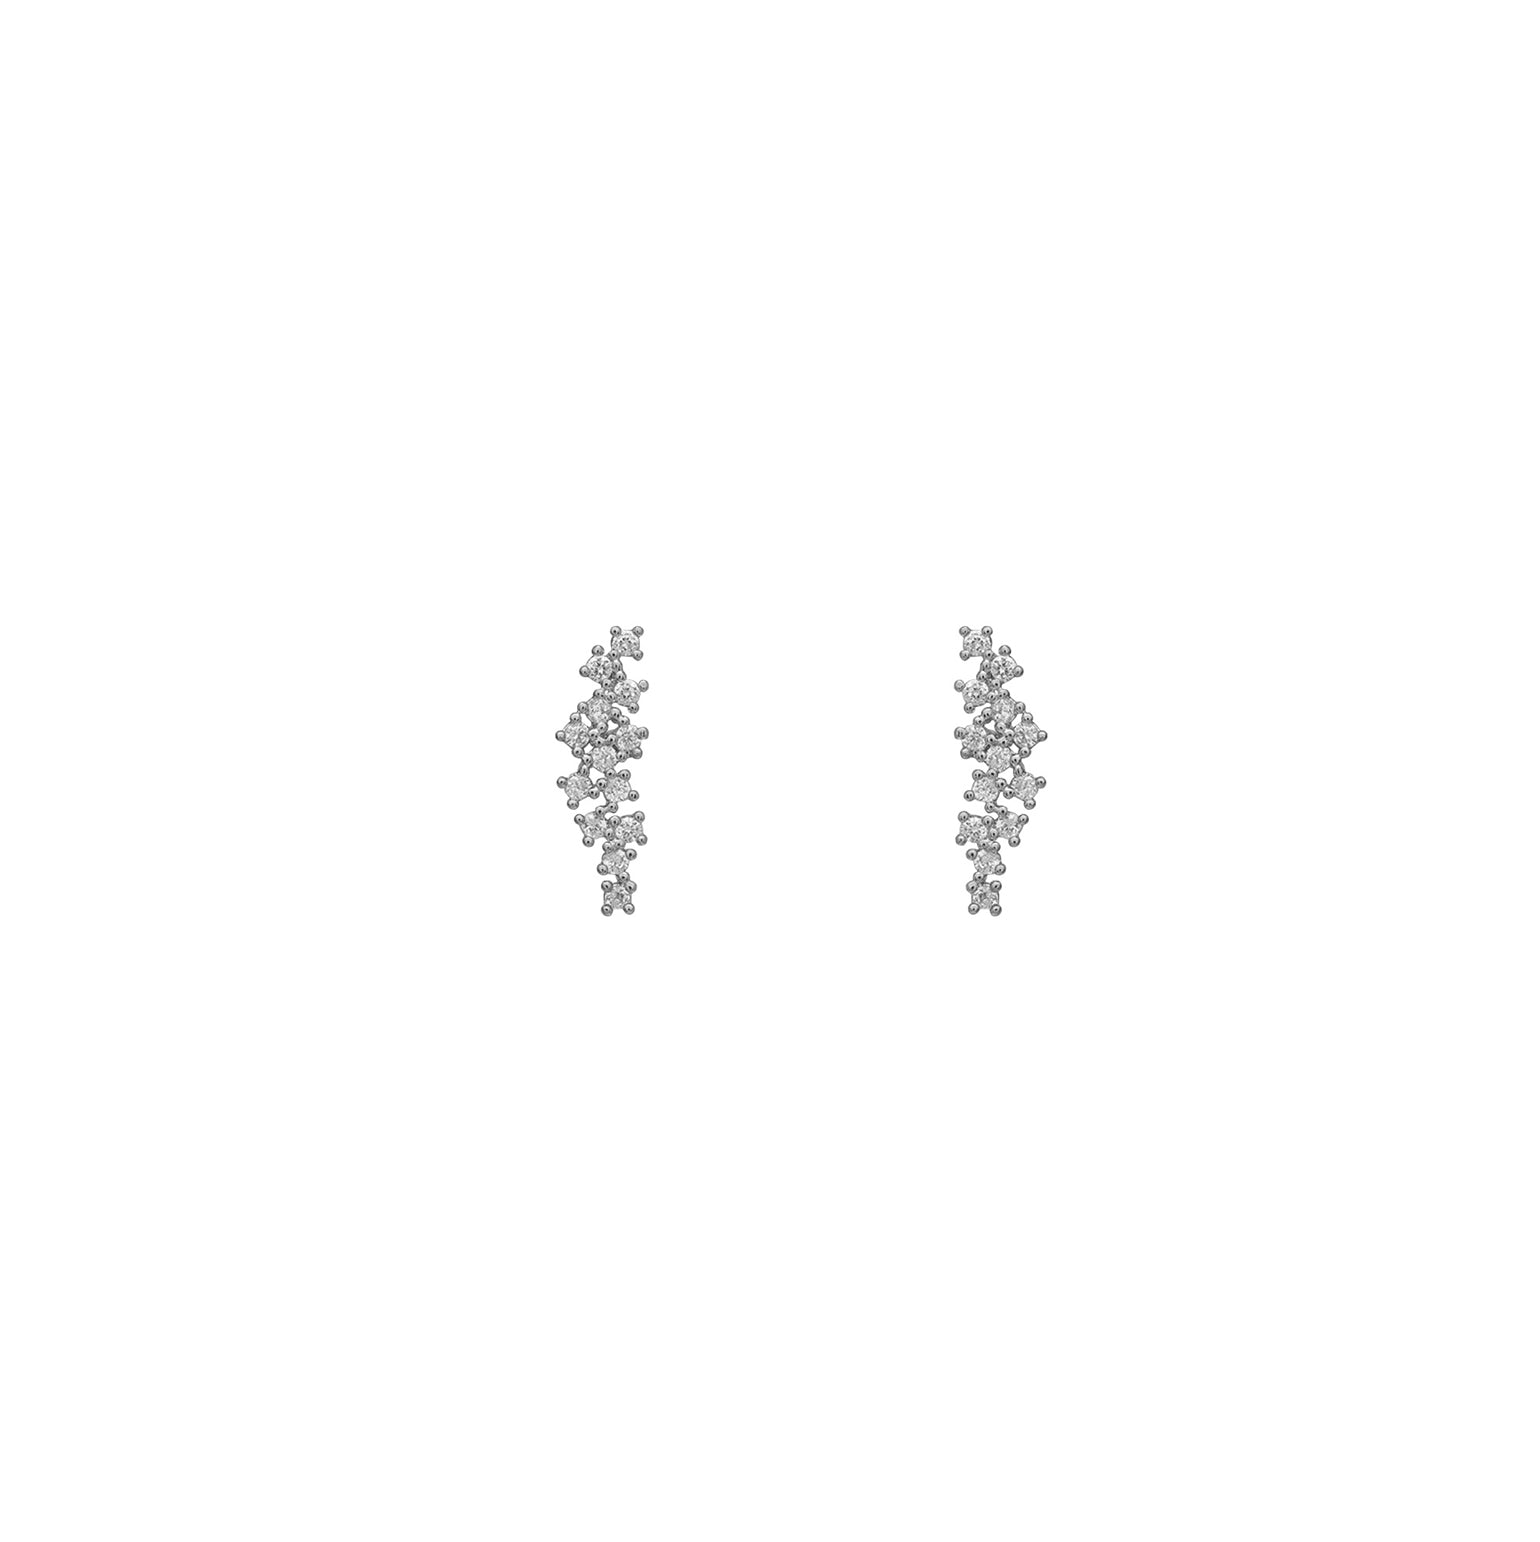 Silver constellation earrings